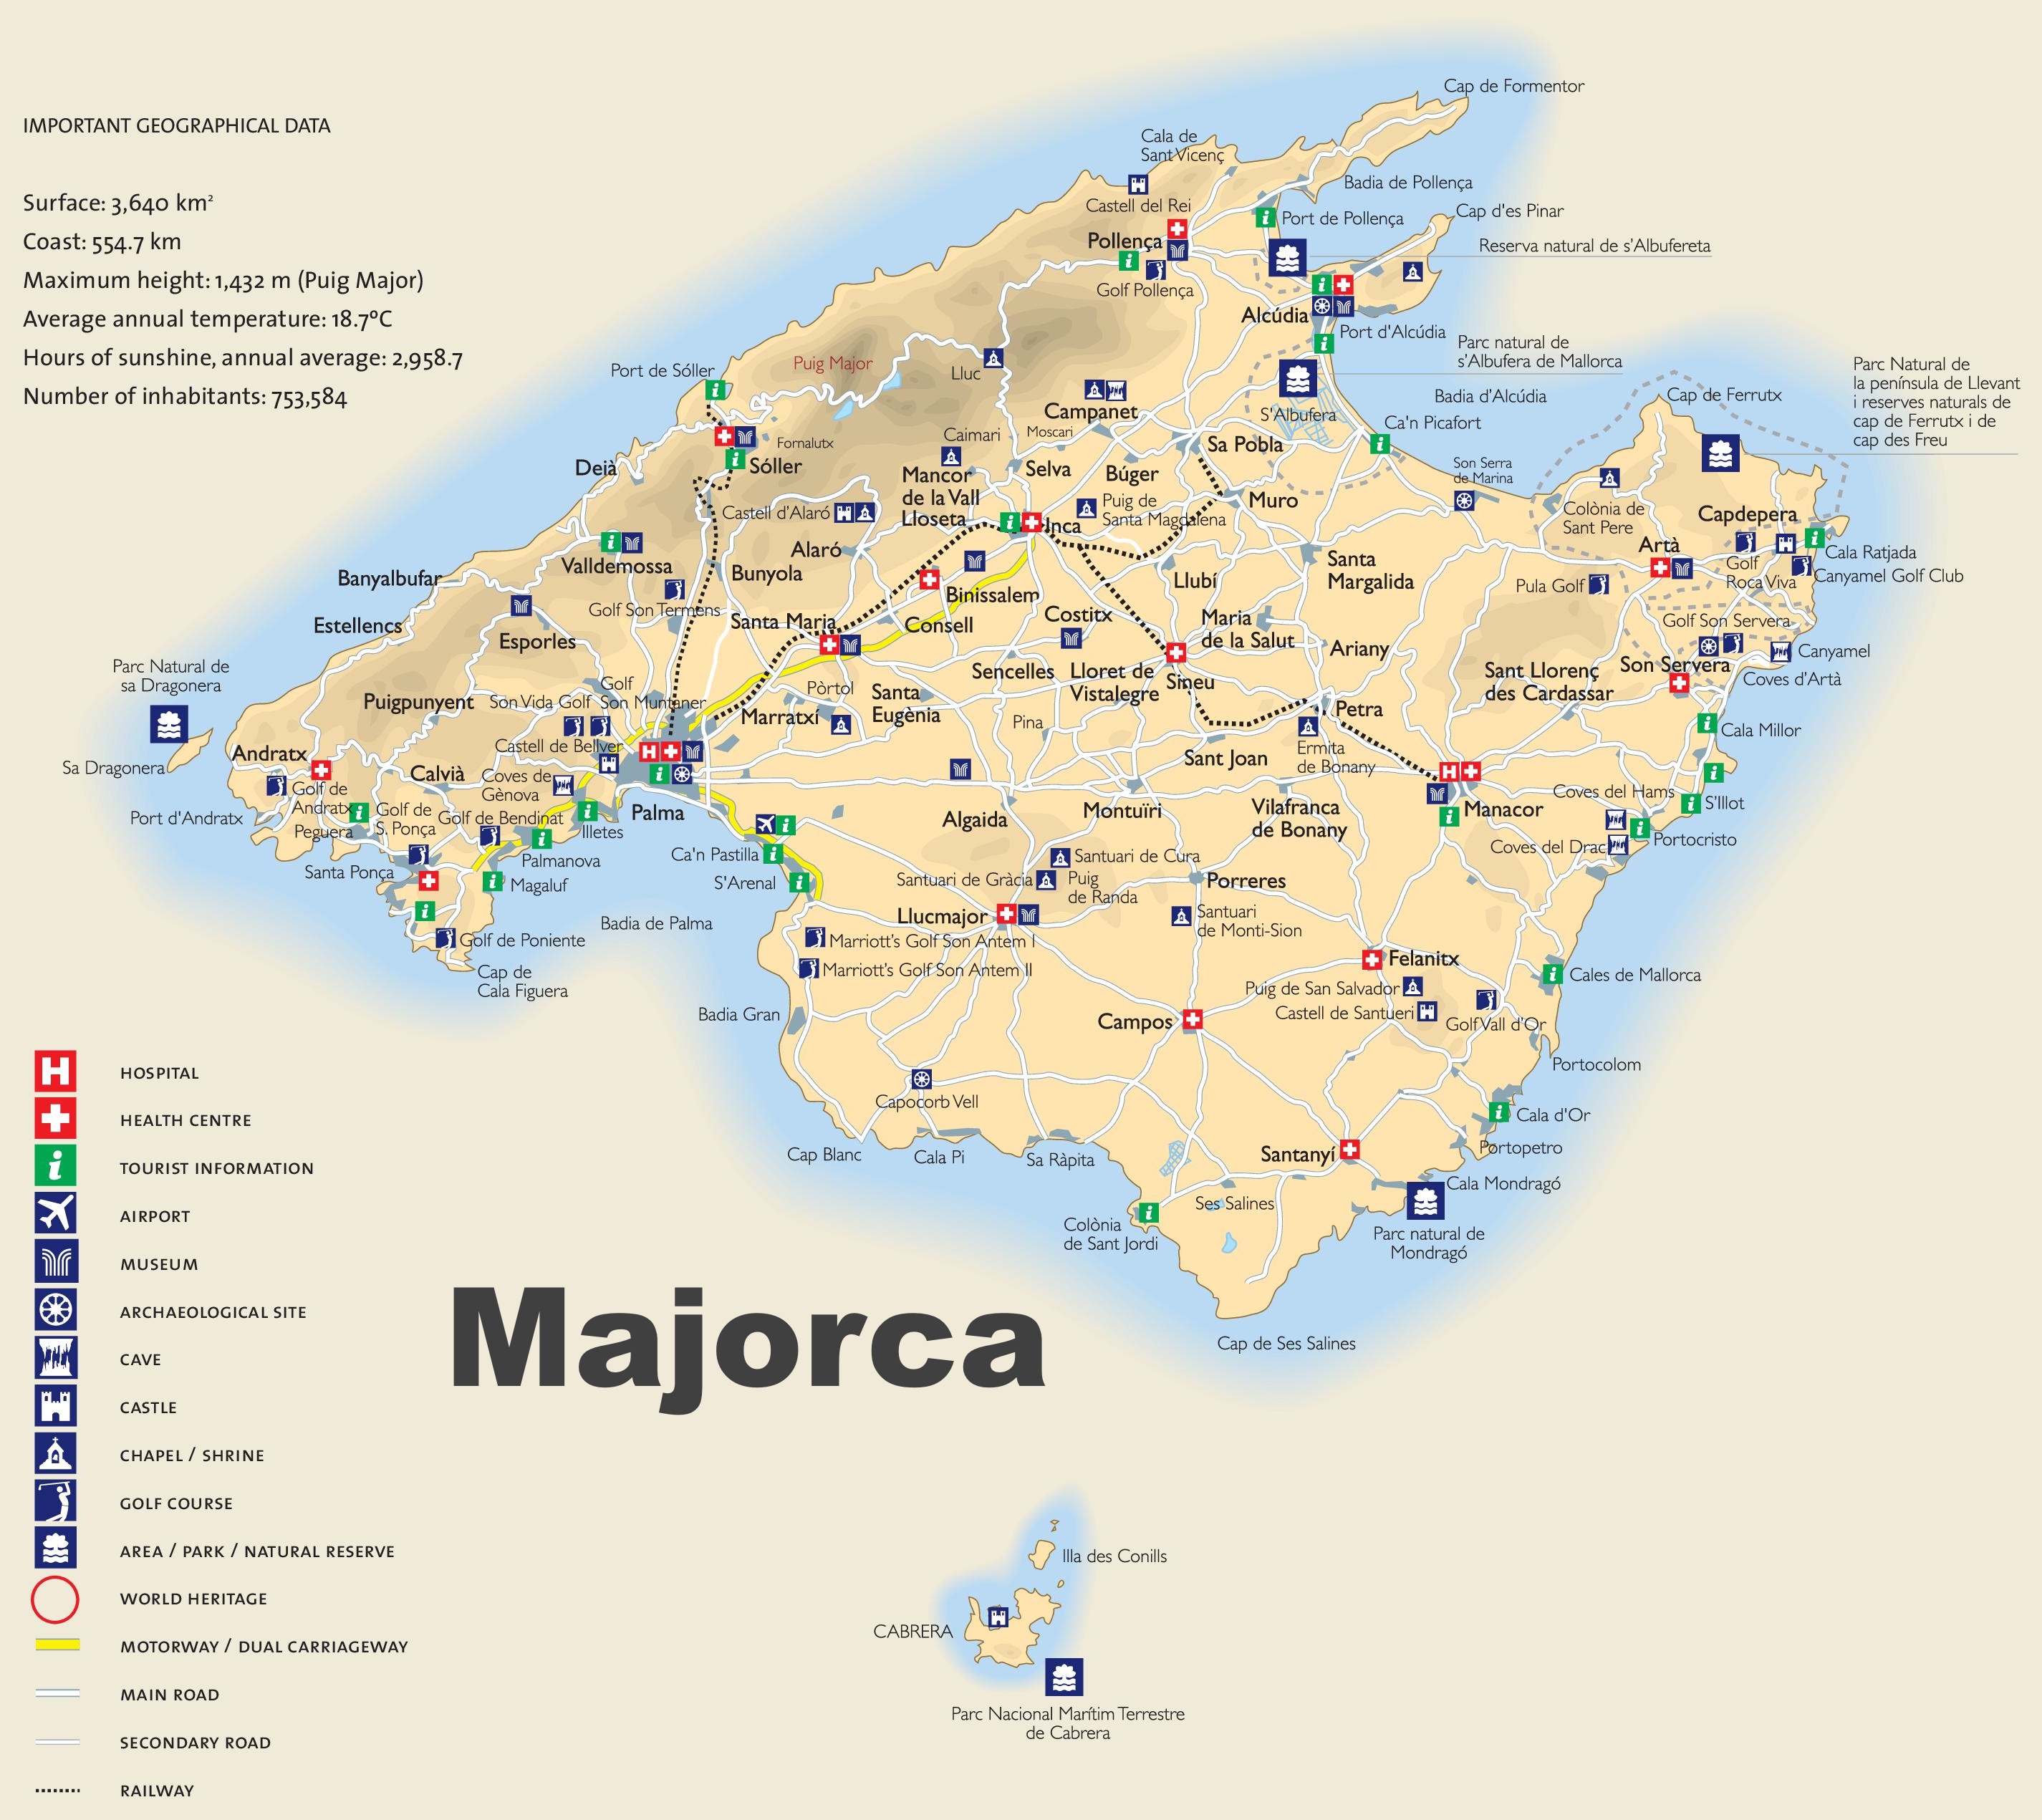 Majorca resorts map - Ontheworldmap.com